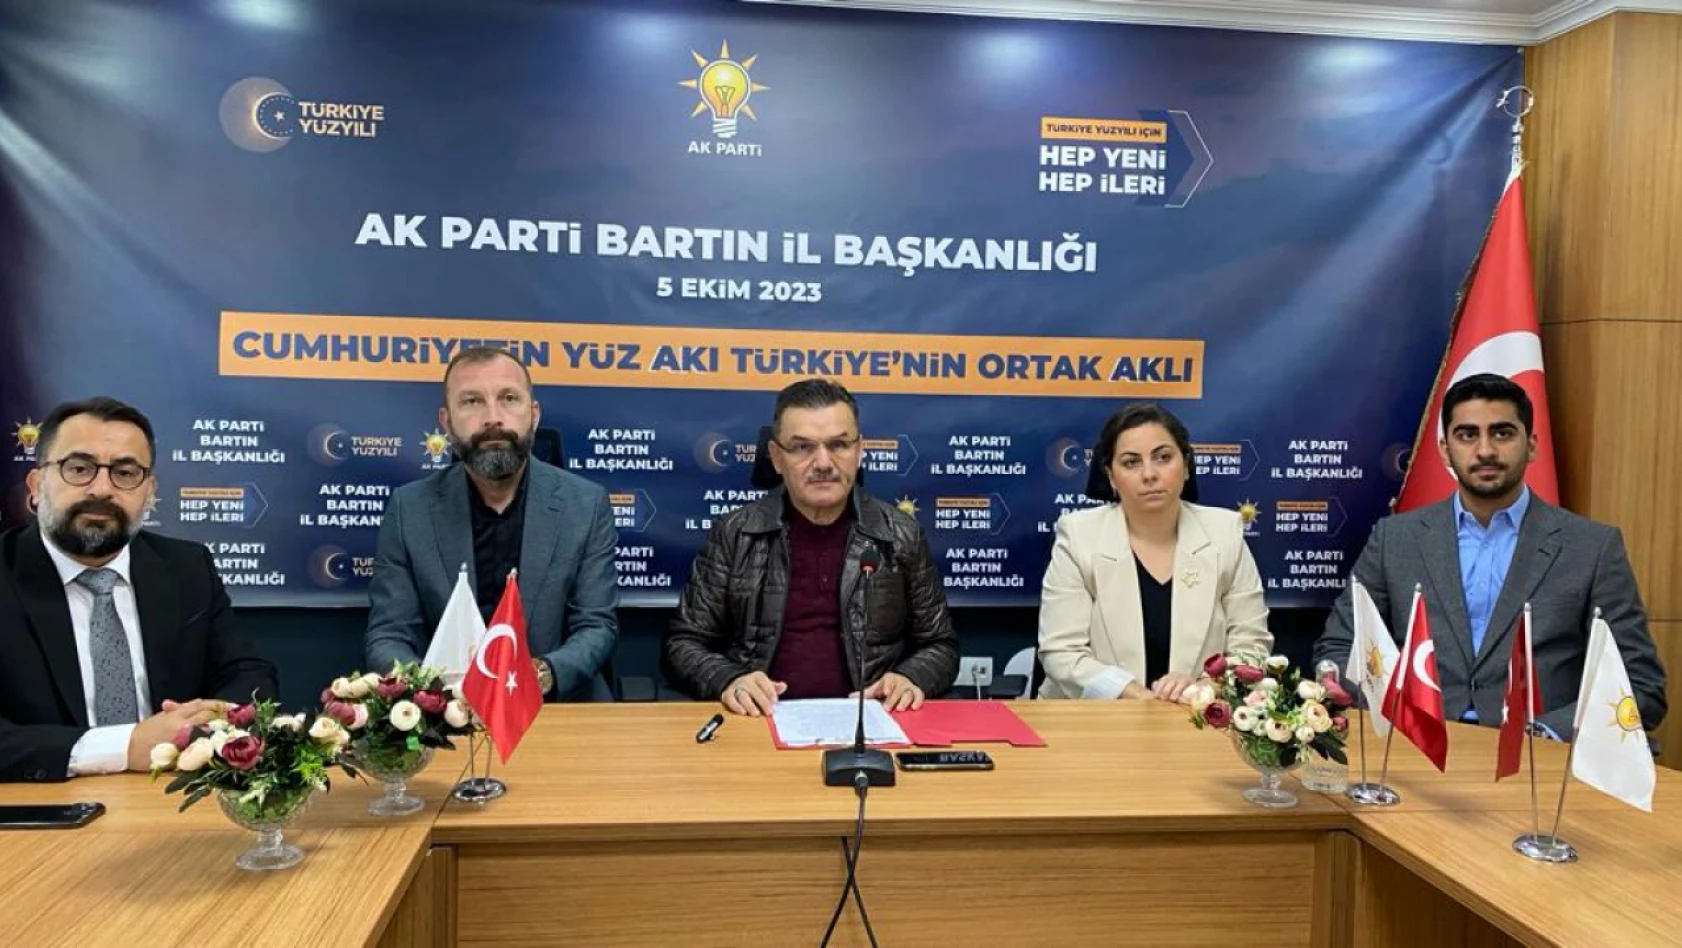 AK Parti :'Abluka savaş değil katliamdır'